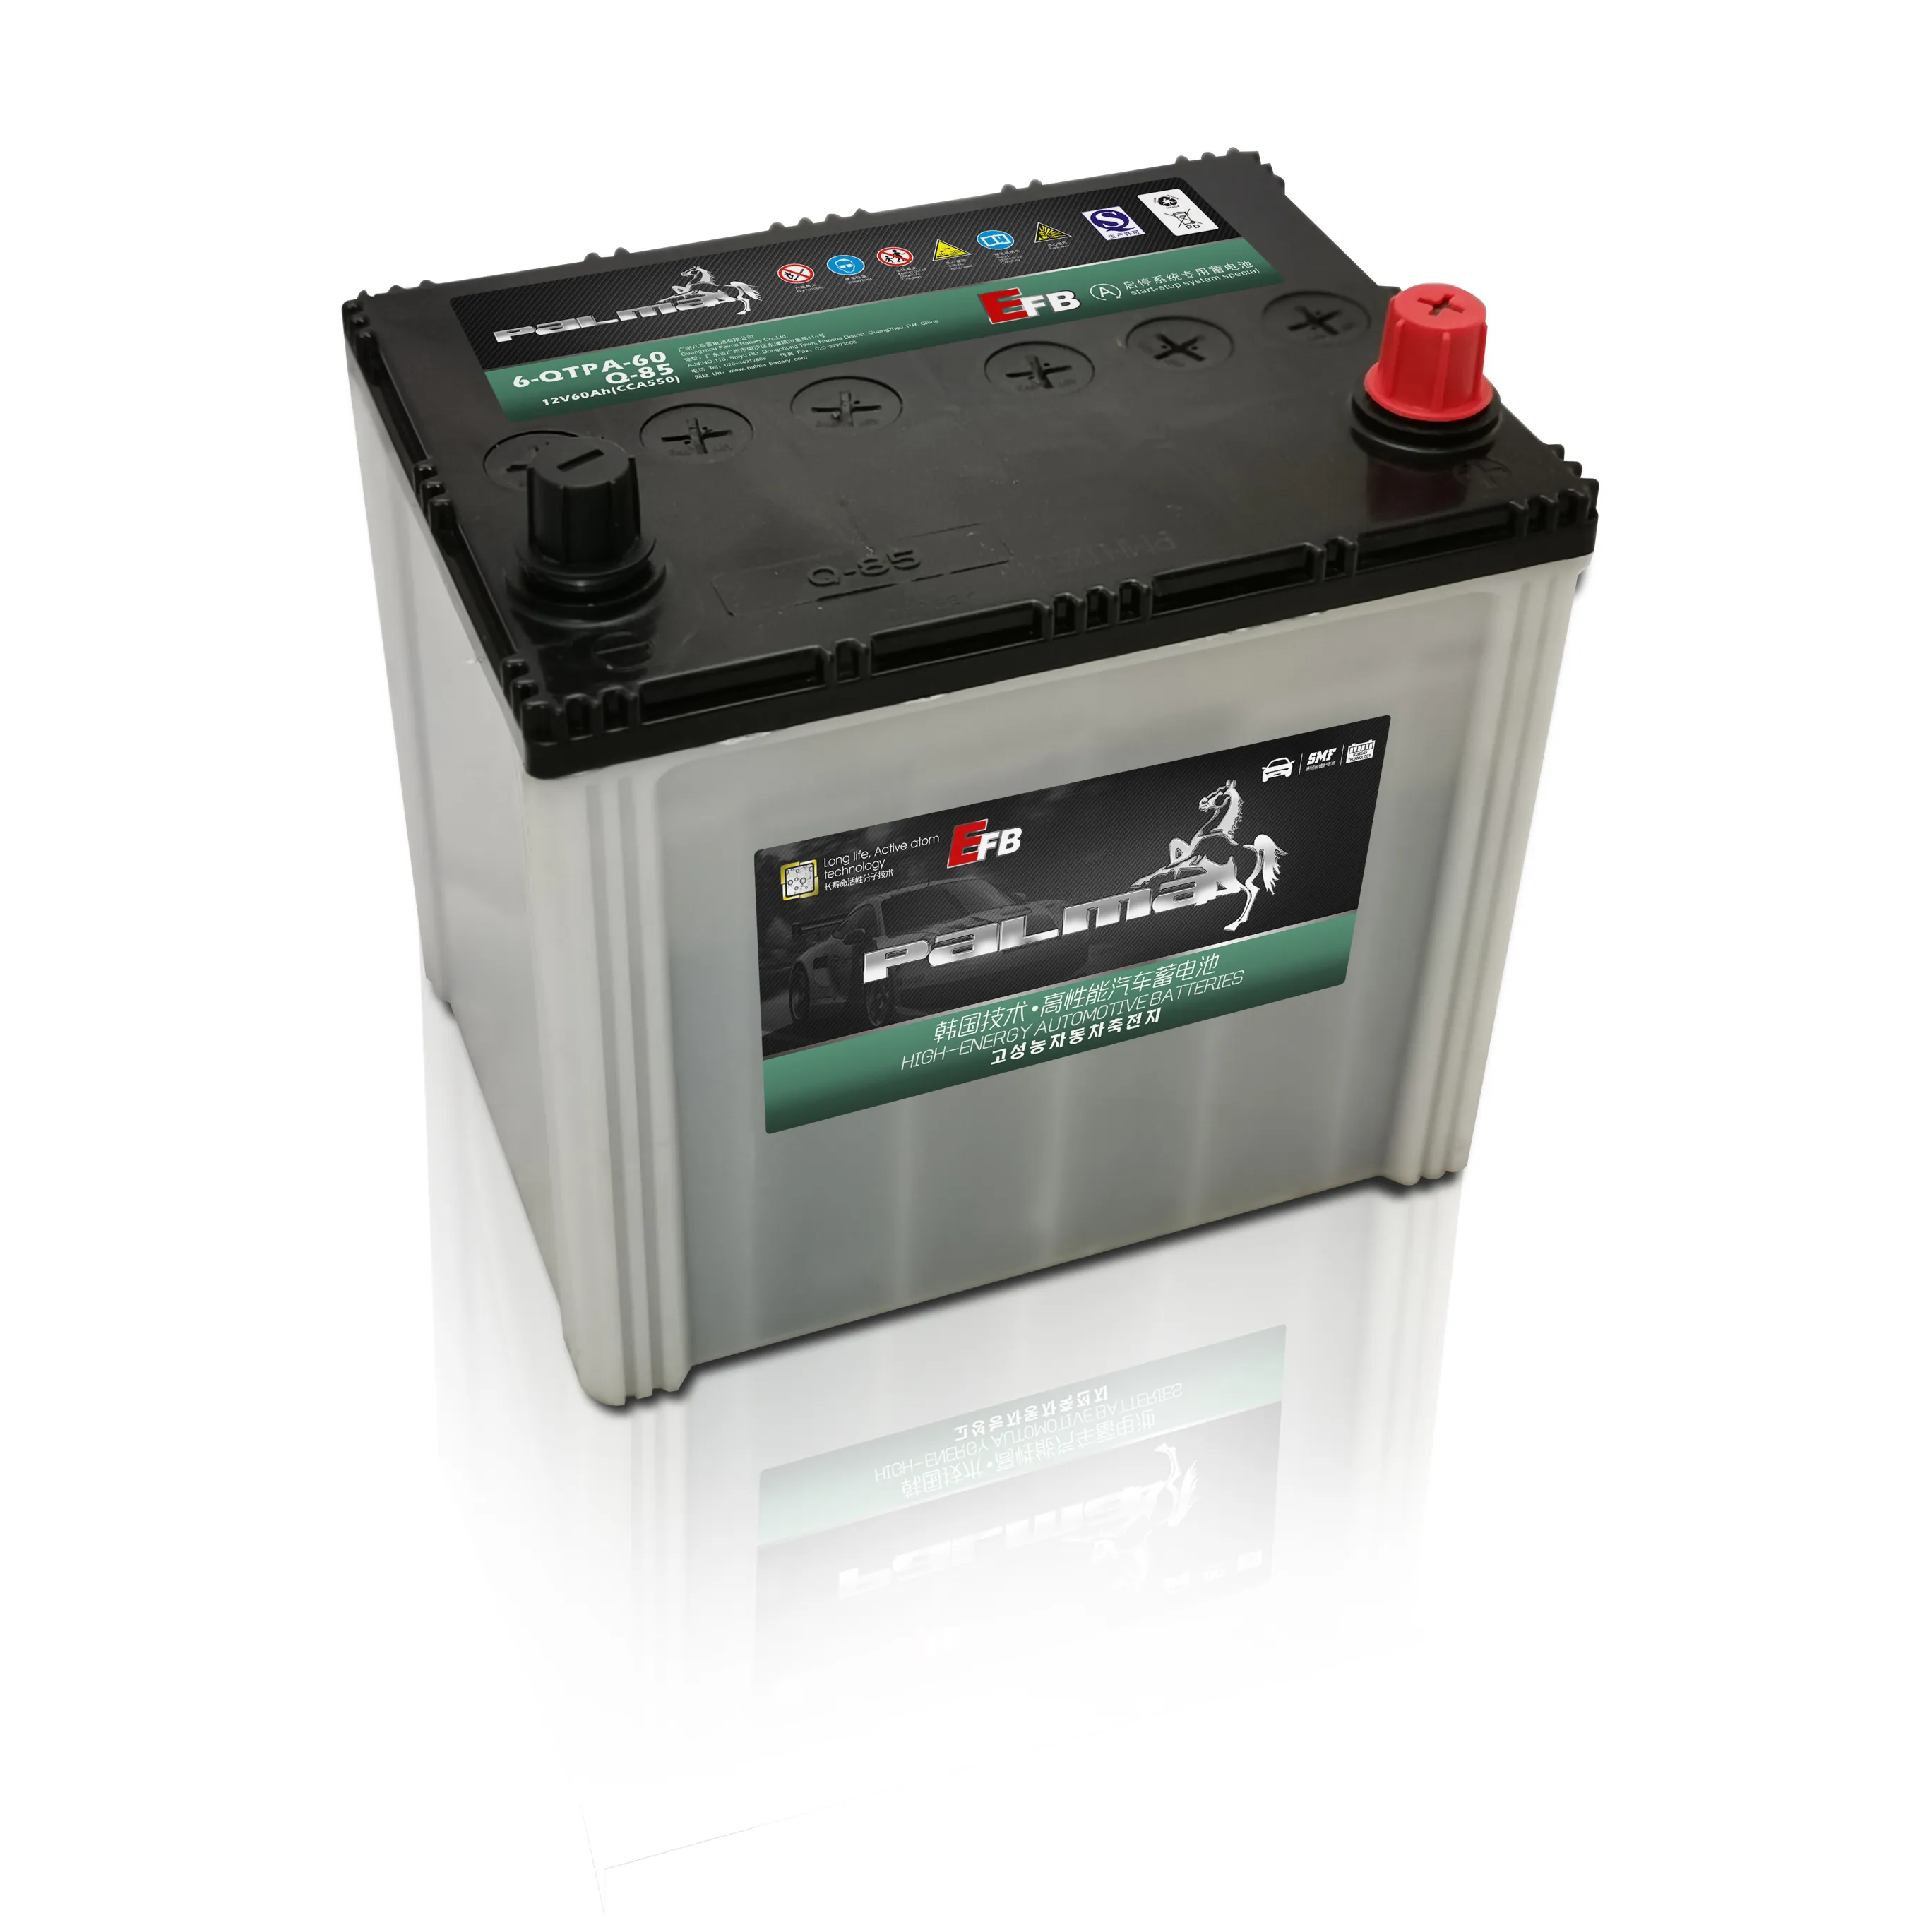 Palma EFB Start-stop System Electric Car Battery MF 12V 60Ah Sealed Lead Acid IN AGM Batteries